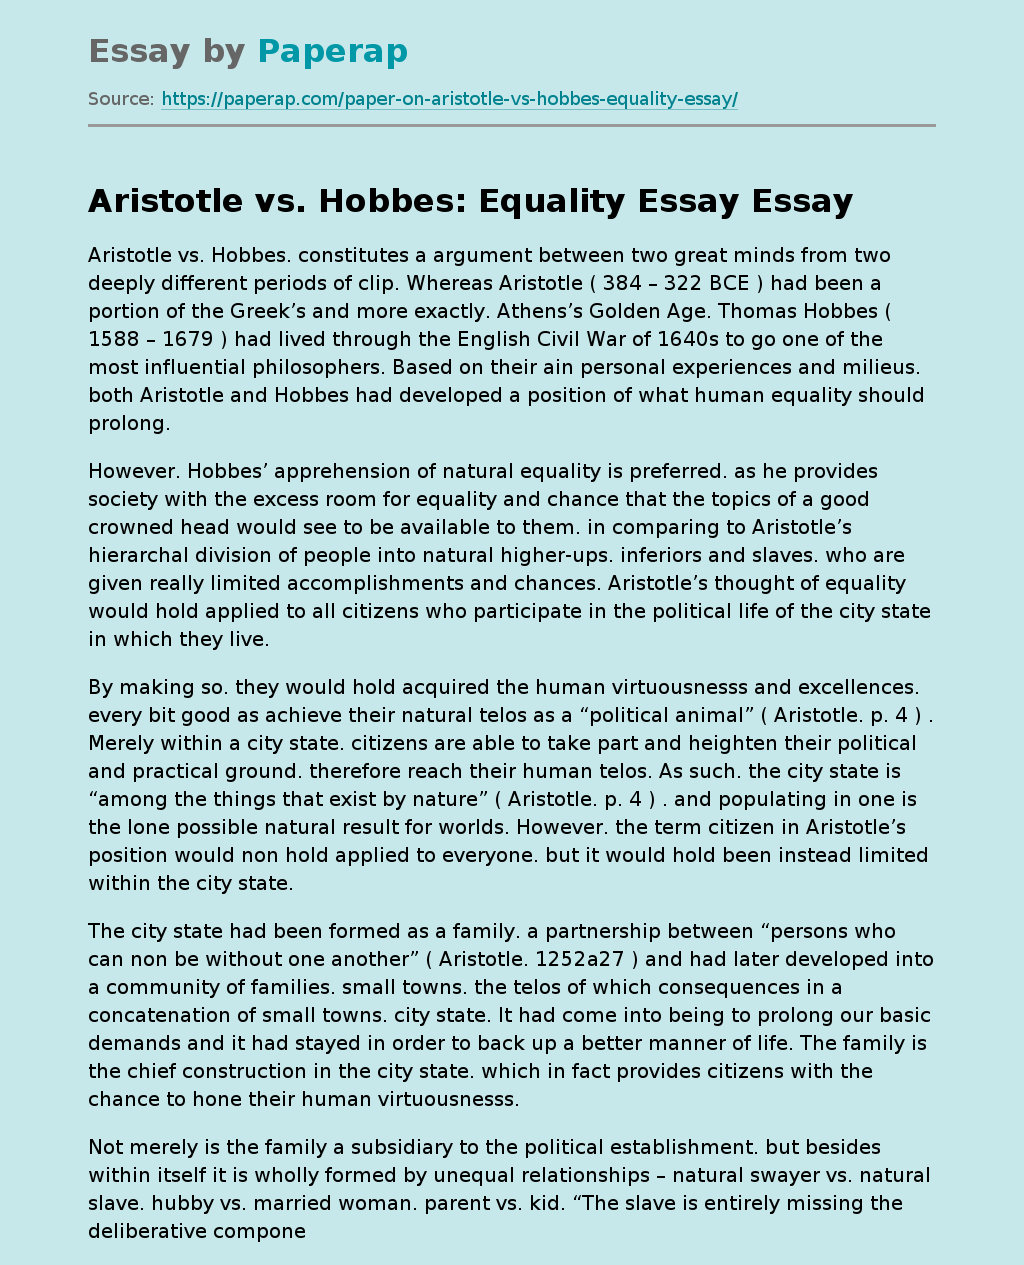 Aristotle vs. Hobbes: Equality Essay